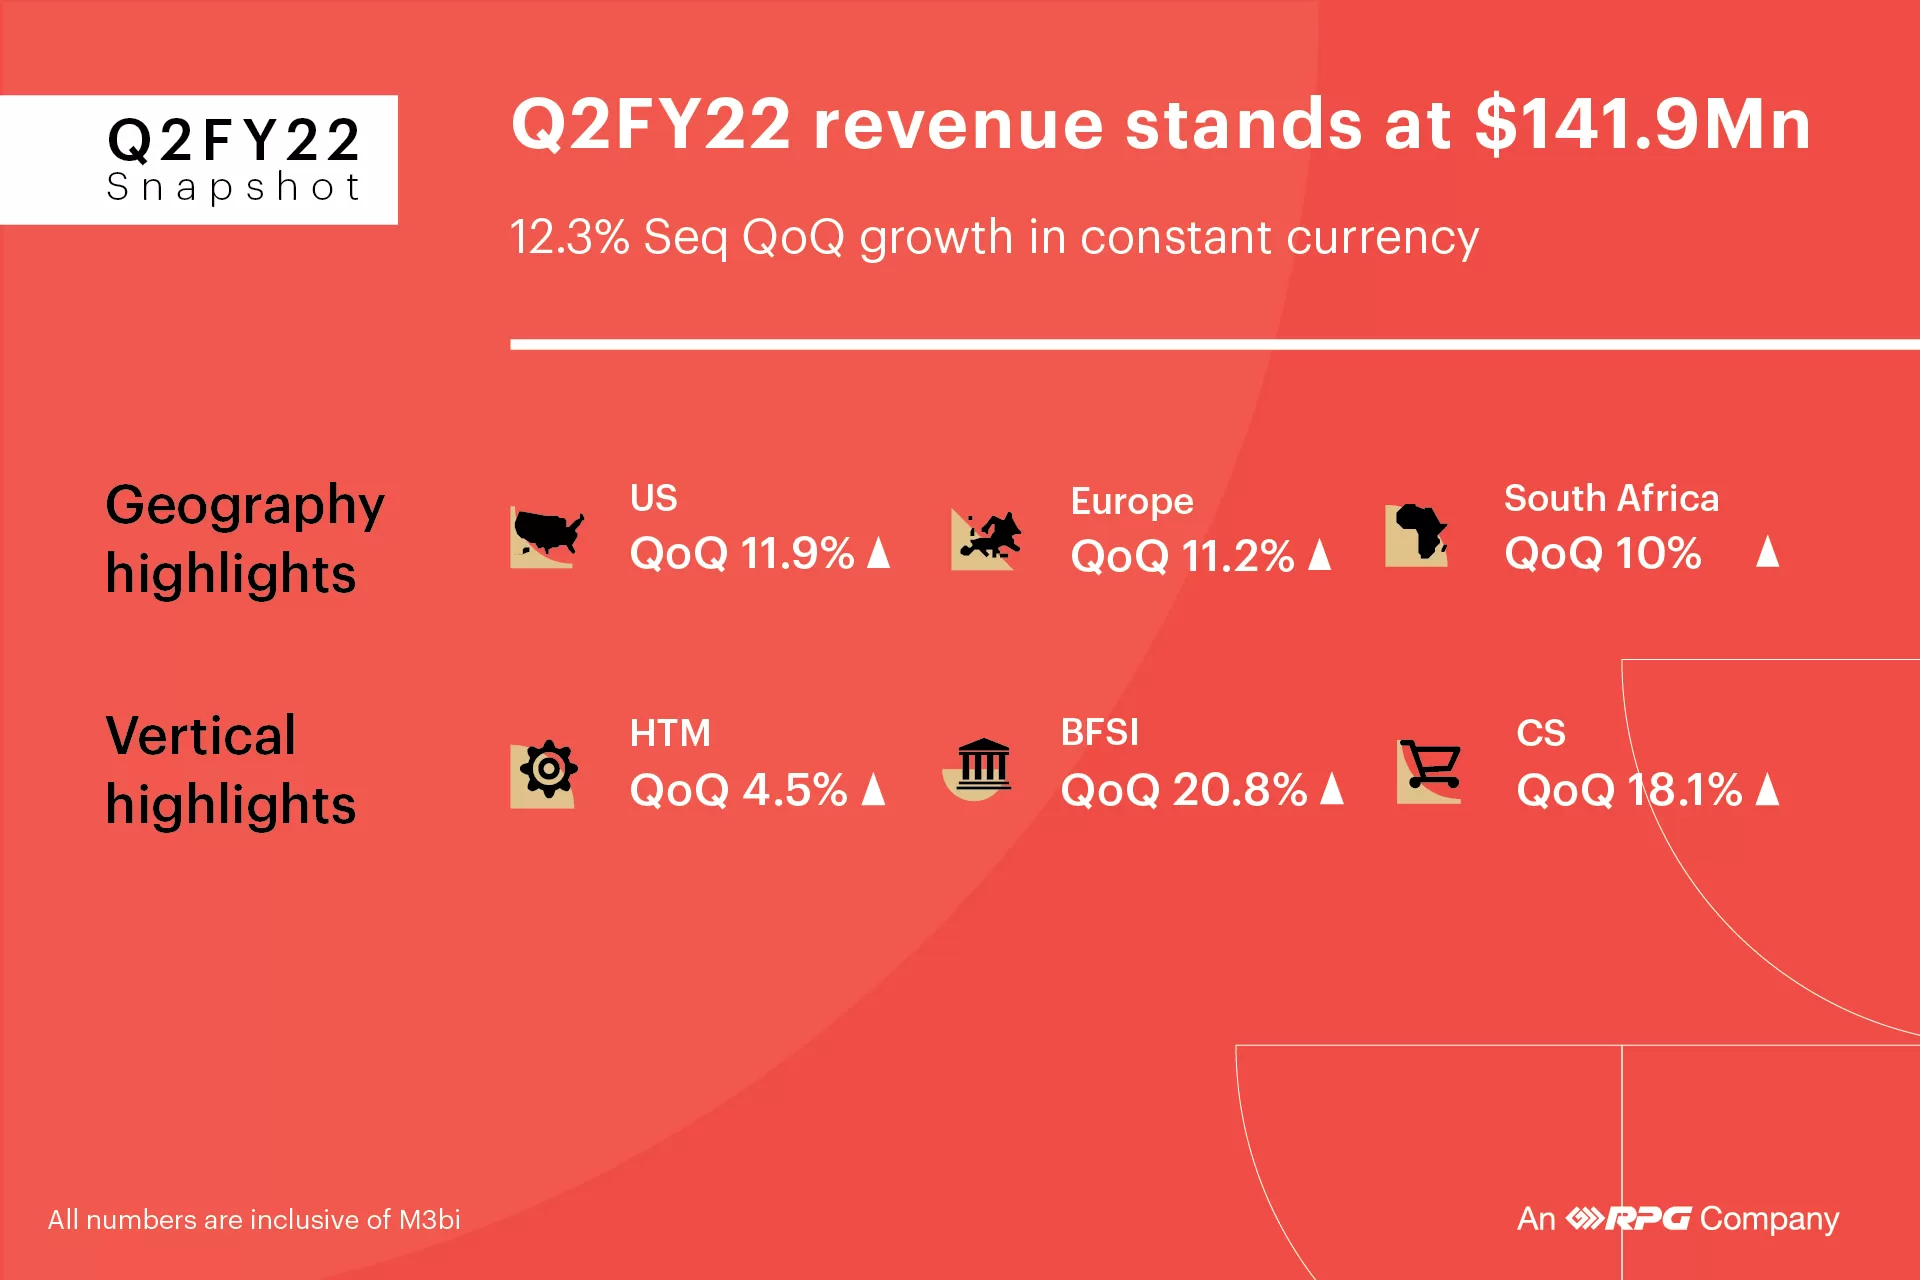 Zensar's constant currency revenues grow 12.3% QoQ in Q2FY22